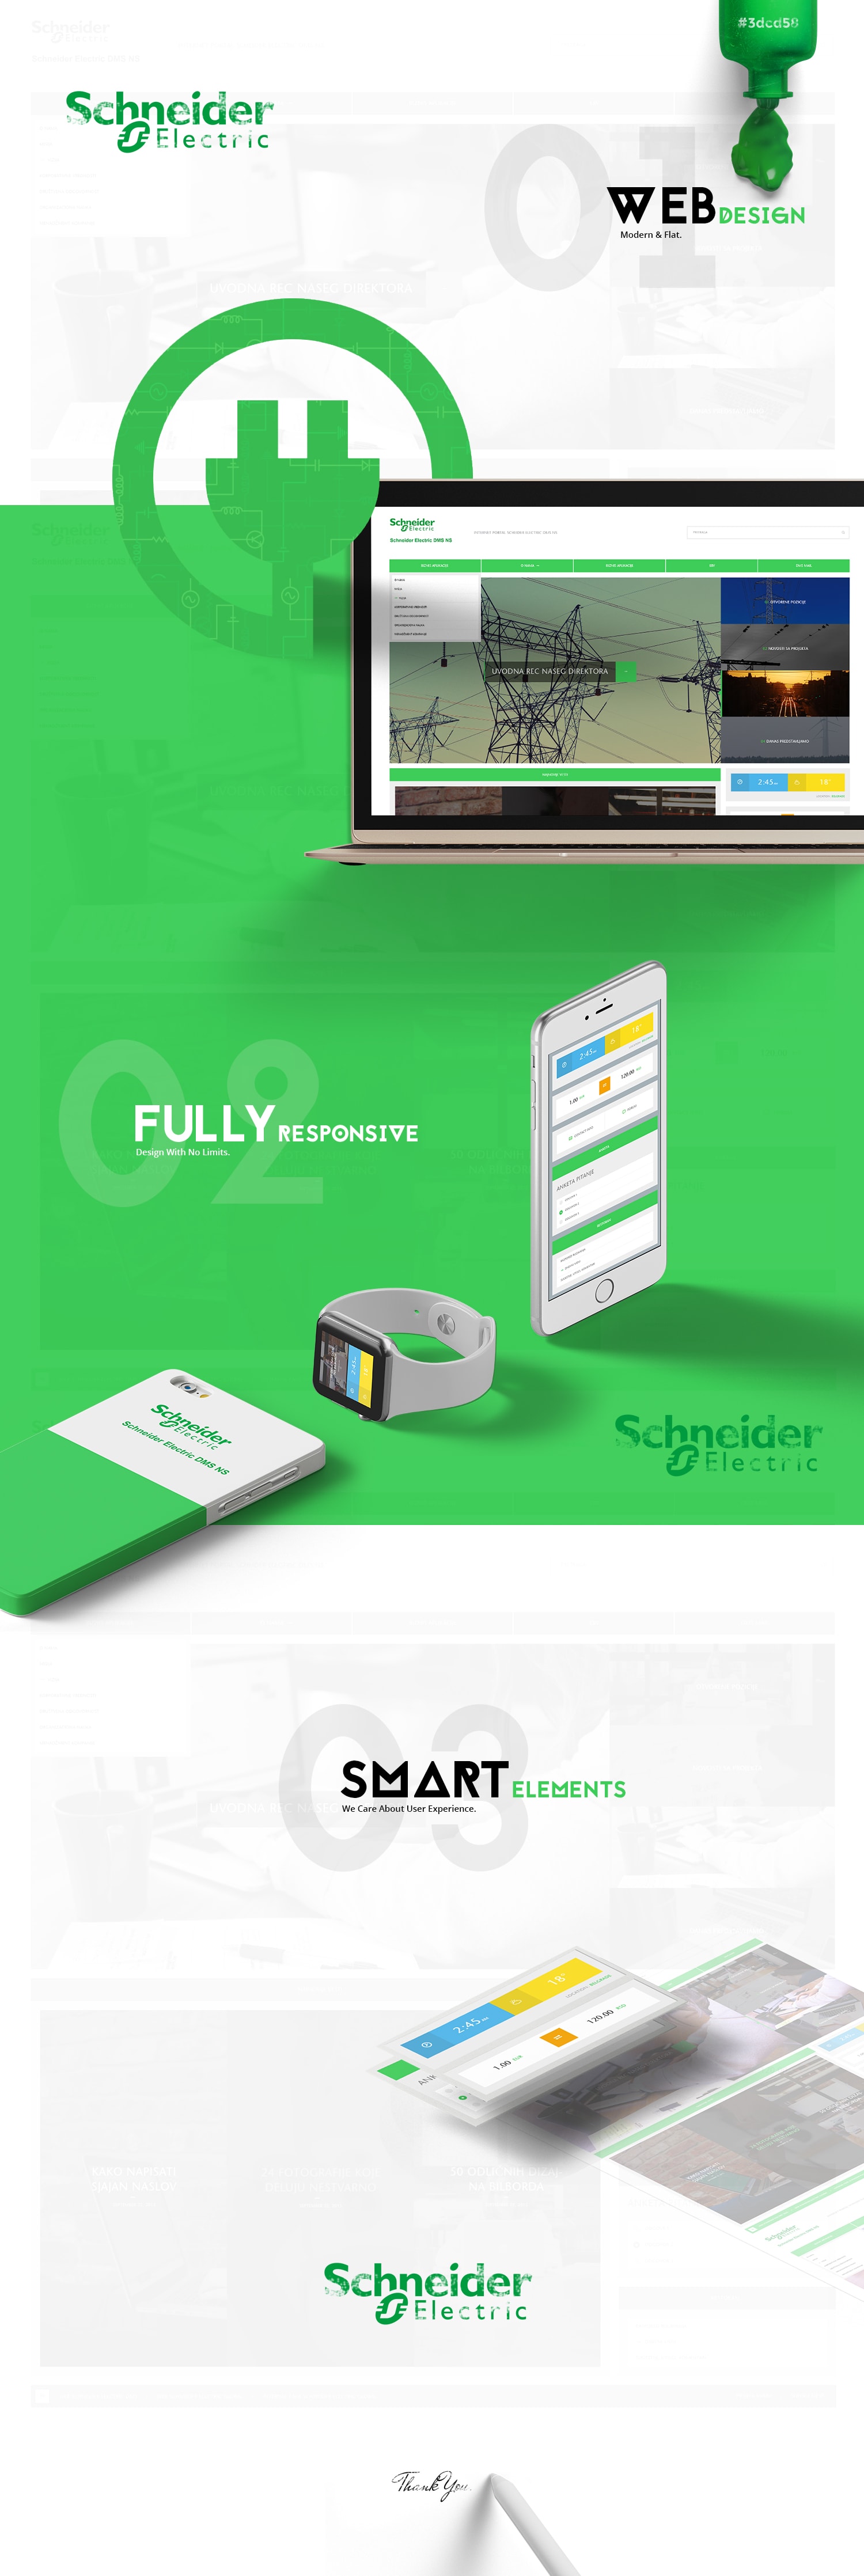 Schneider Electric - websajt dizajn